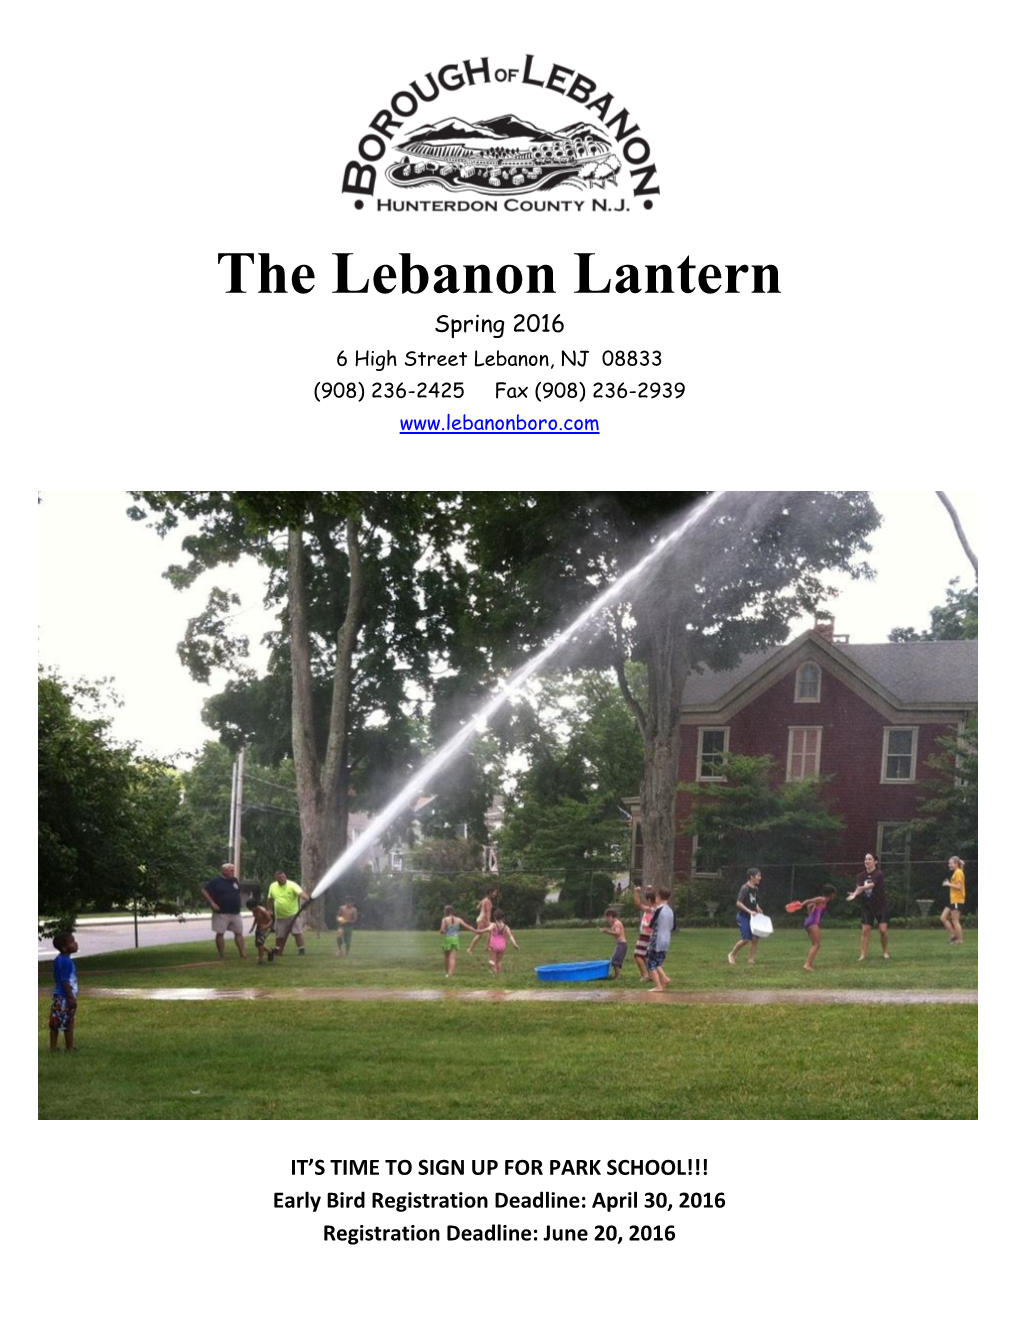 The Lebanon Lantern Spring 2016 6 High Street Lebanon, NJ 08833 (908) 236-2425 Fax (908) 236-2939